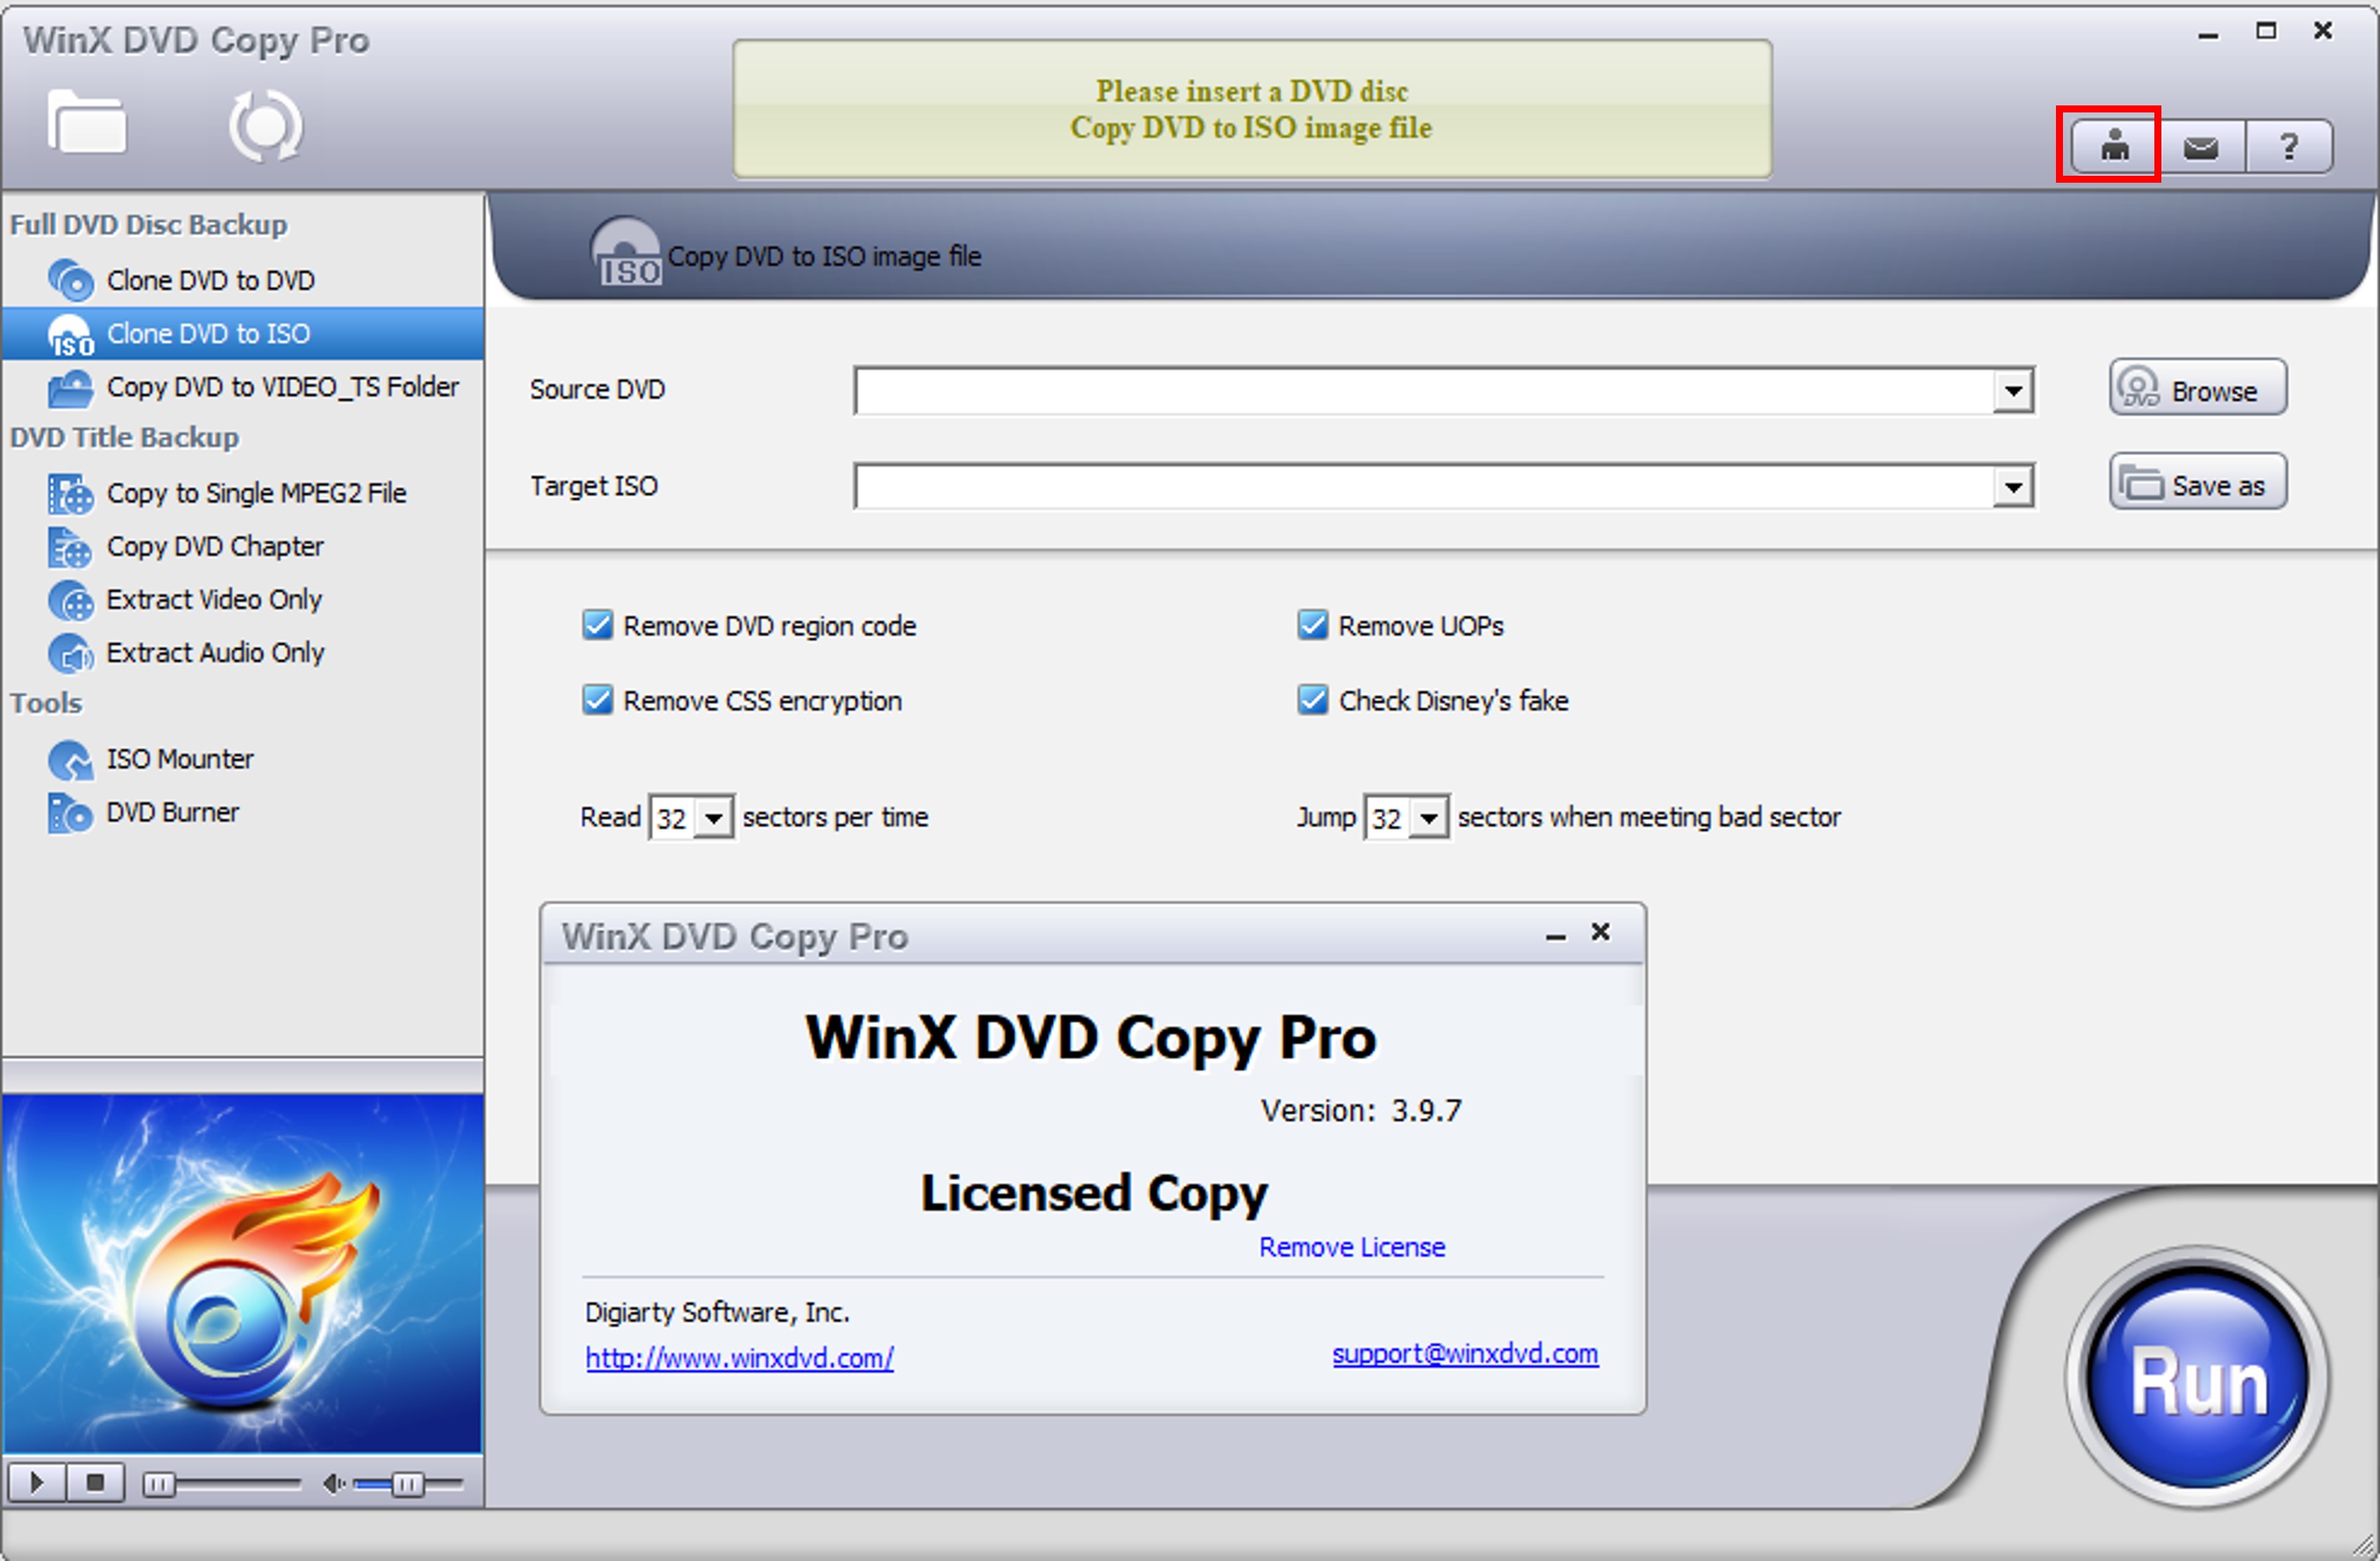 WinX_DVD_Copy_Pro_03.jpg